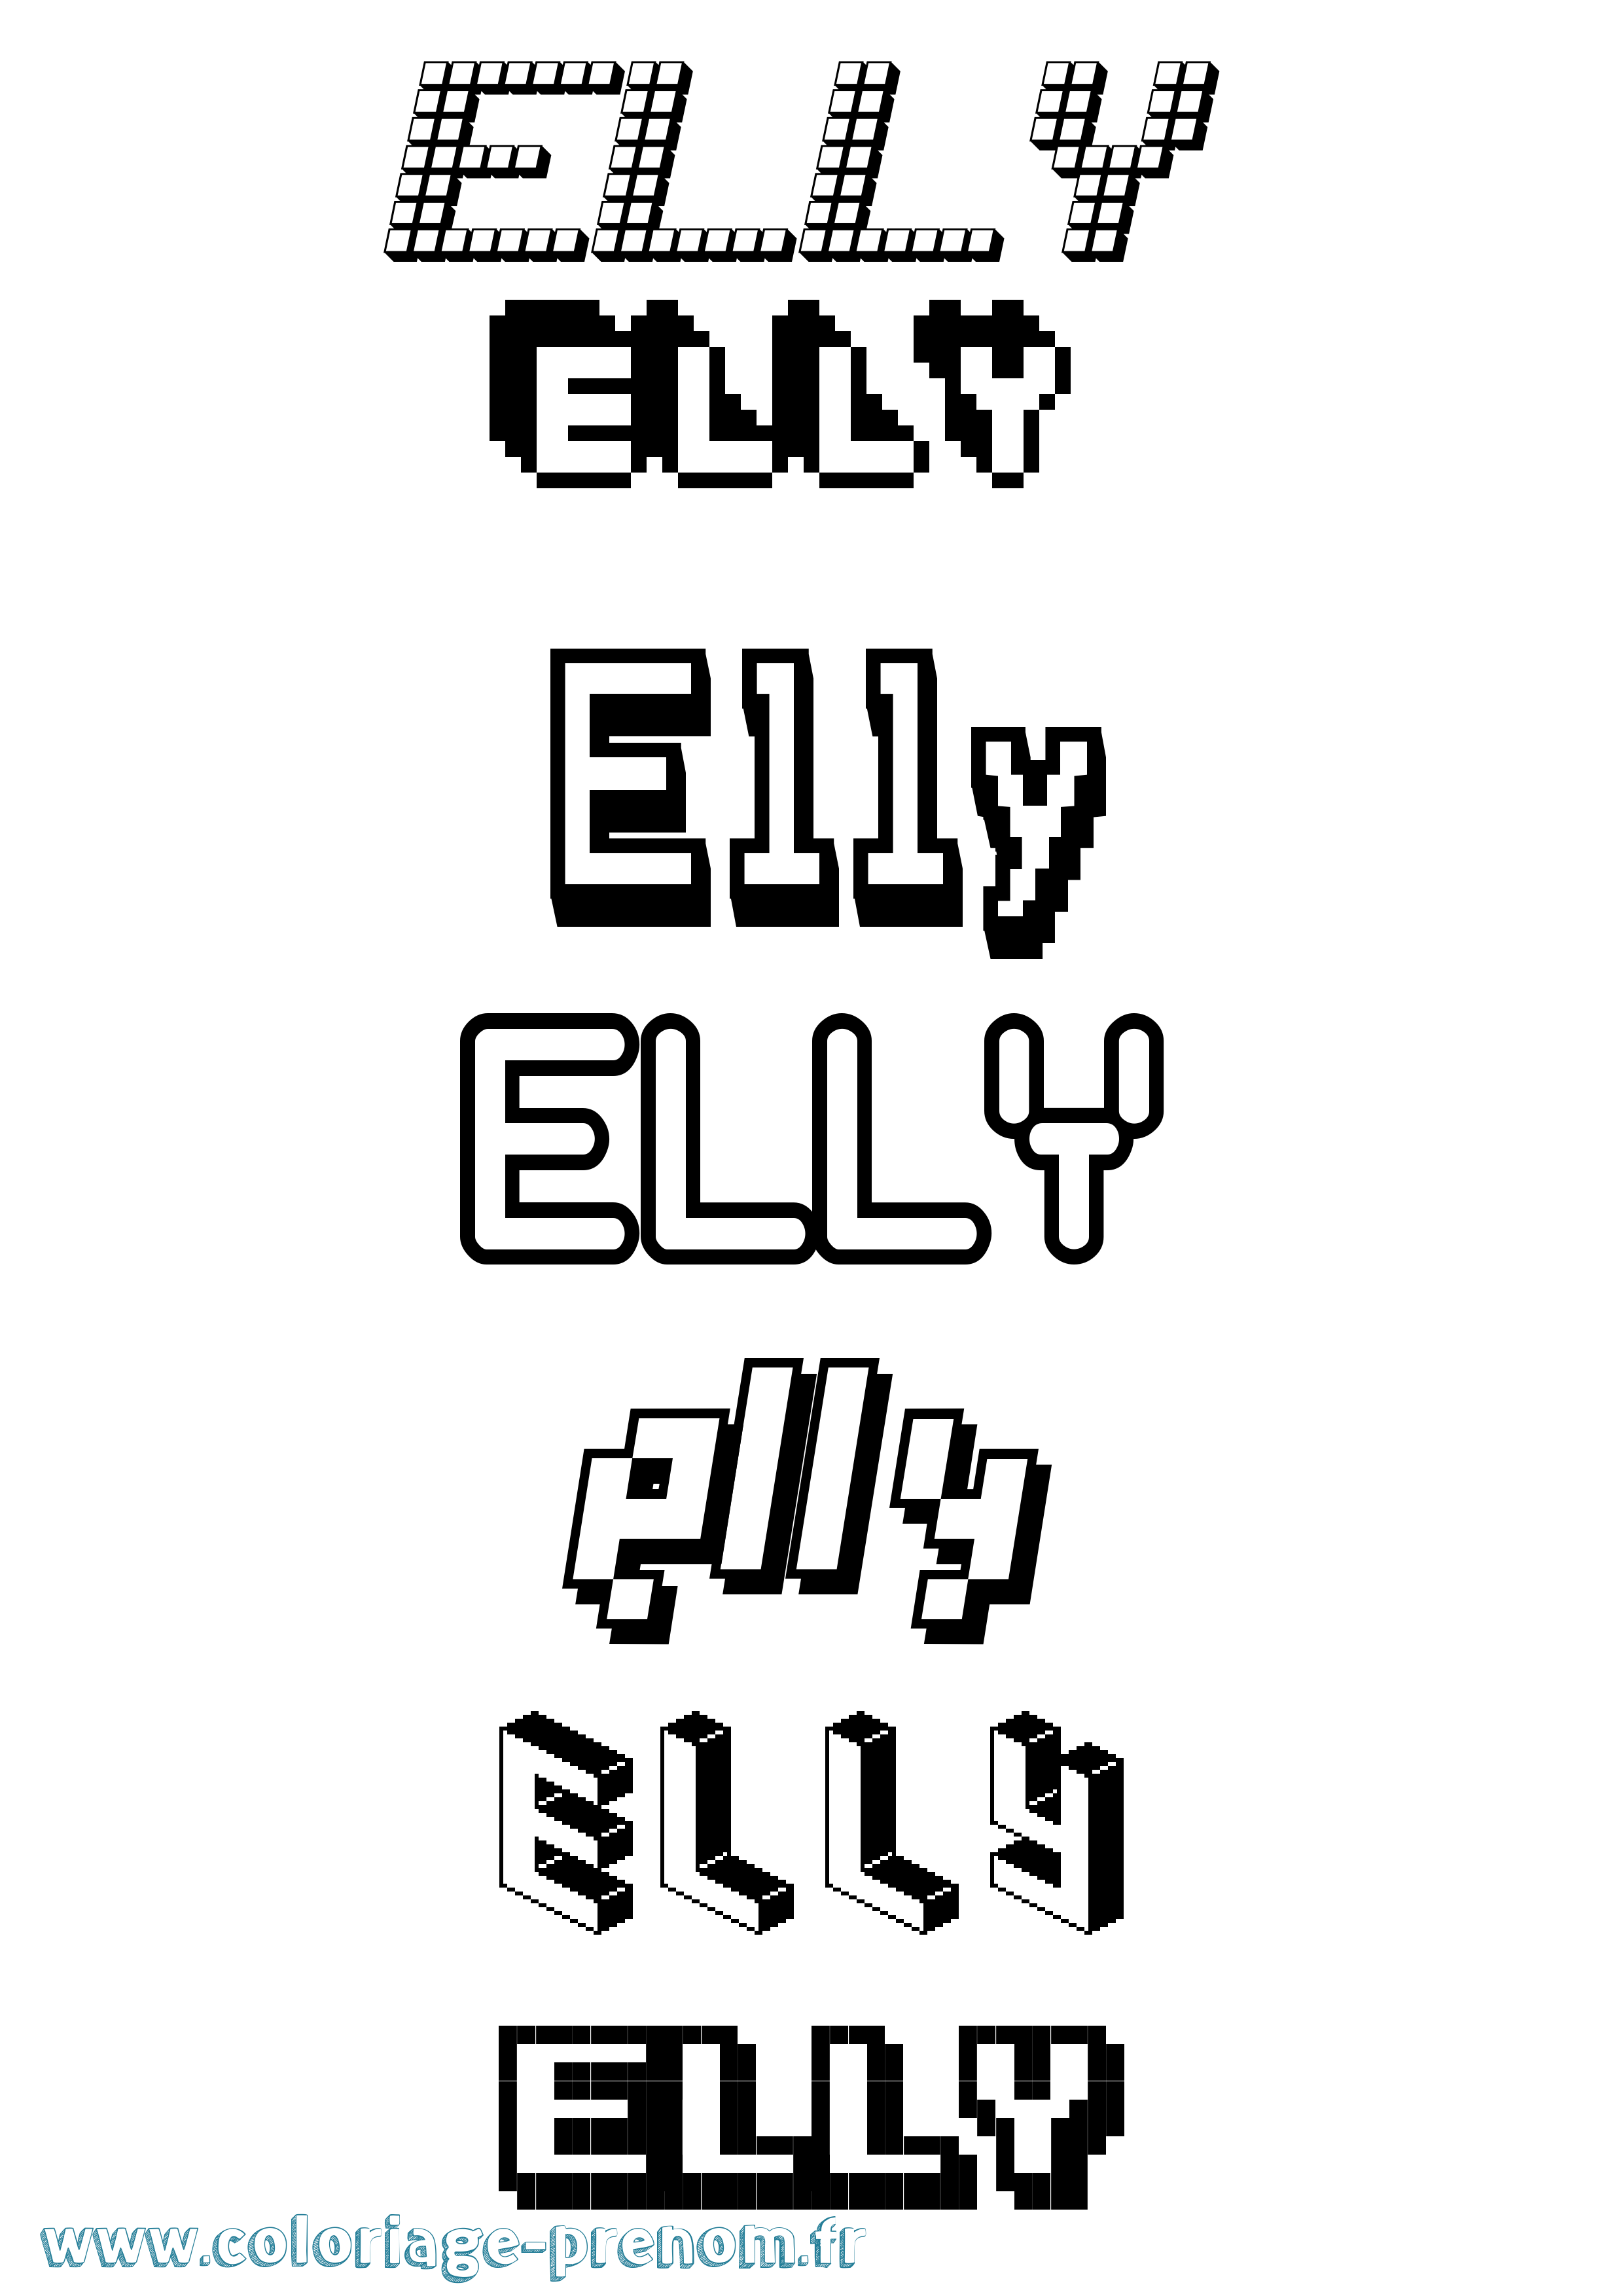 Coloriage prénom Elly Pixel